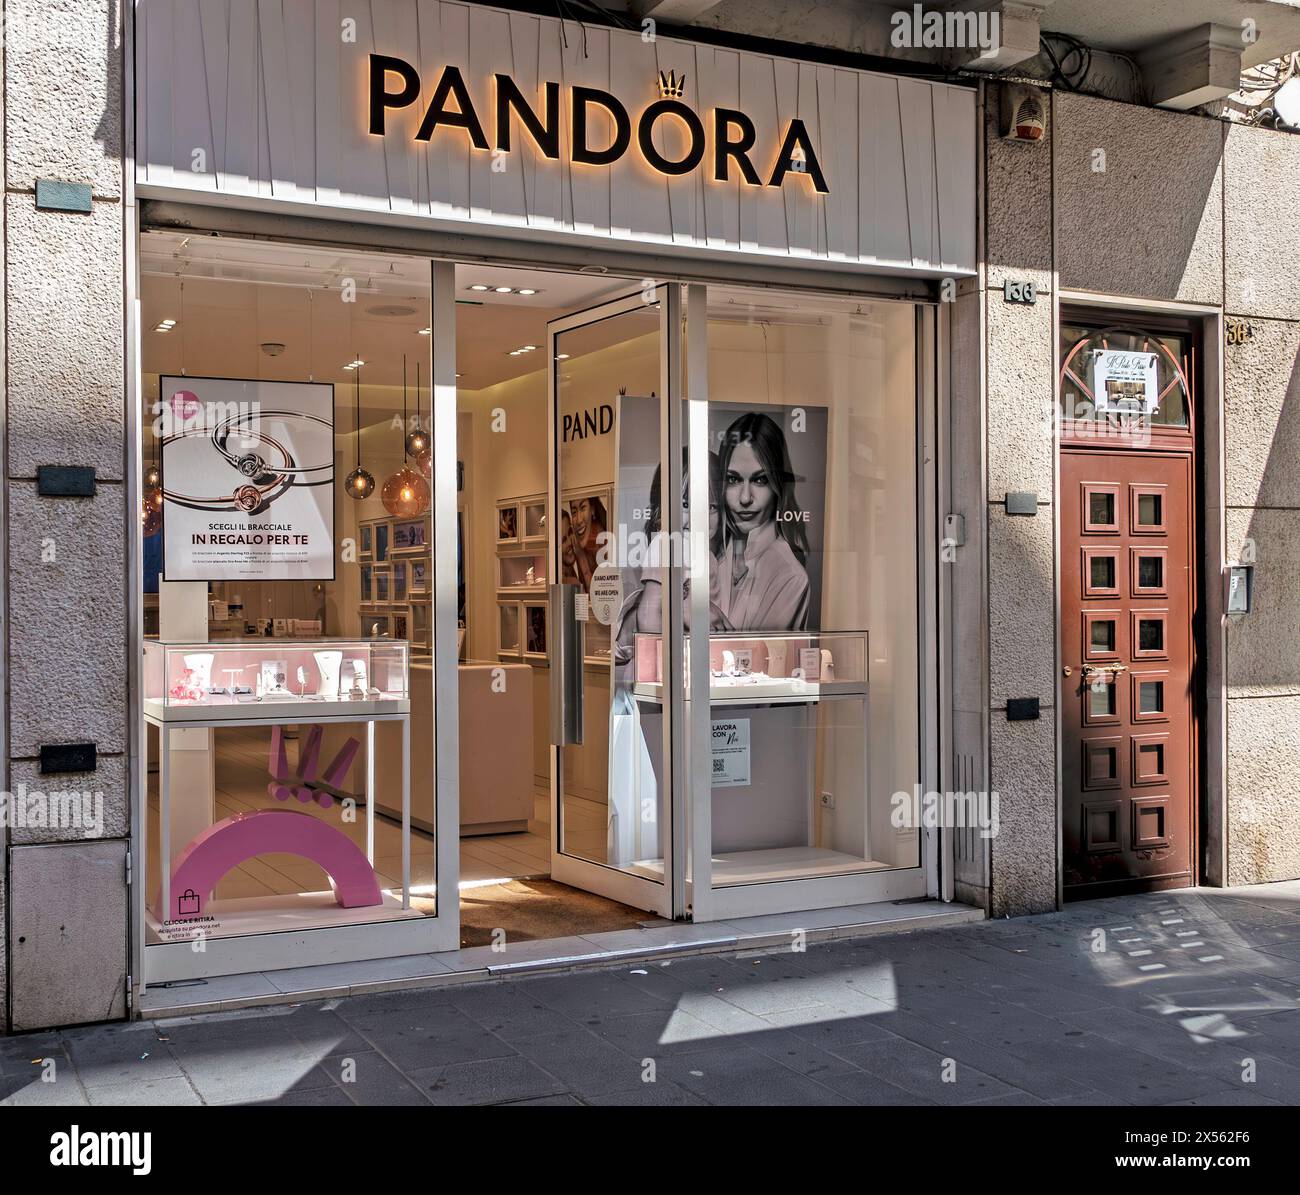 Pandora Jewelry Store Facade Bari, Italie. Banque D'Images